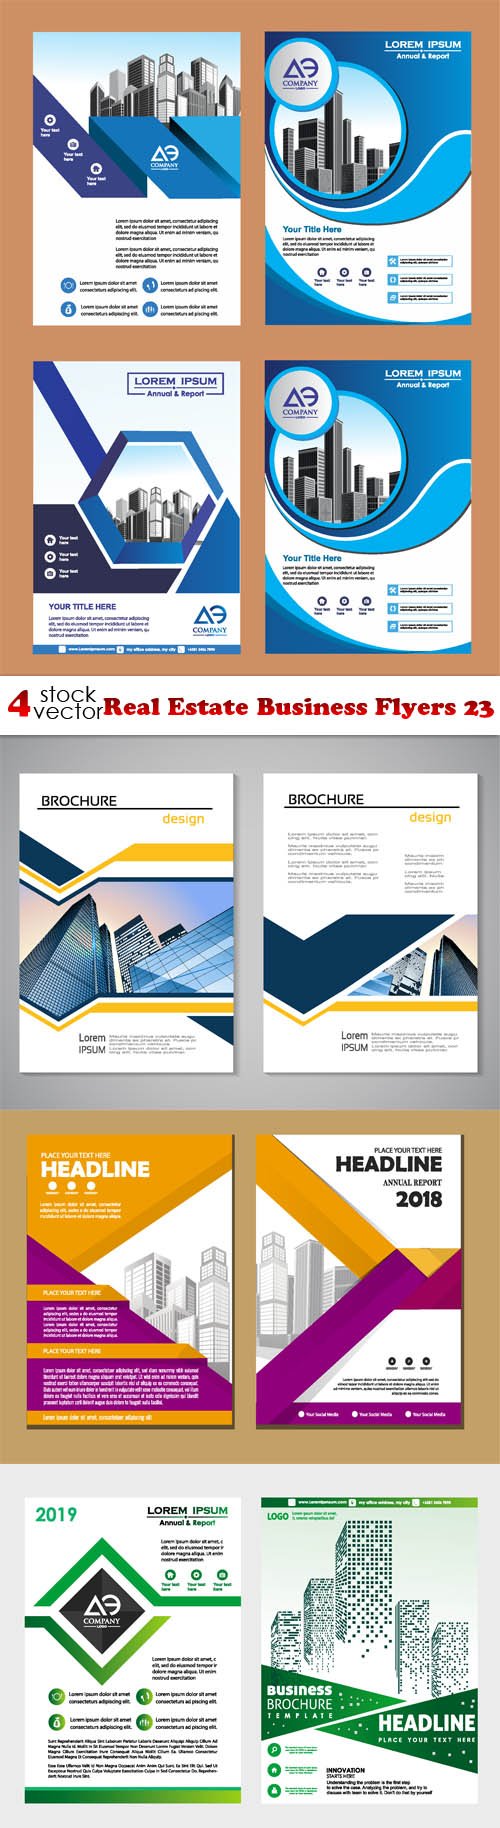 Vectors - Real Estate Business Flyers 23